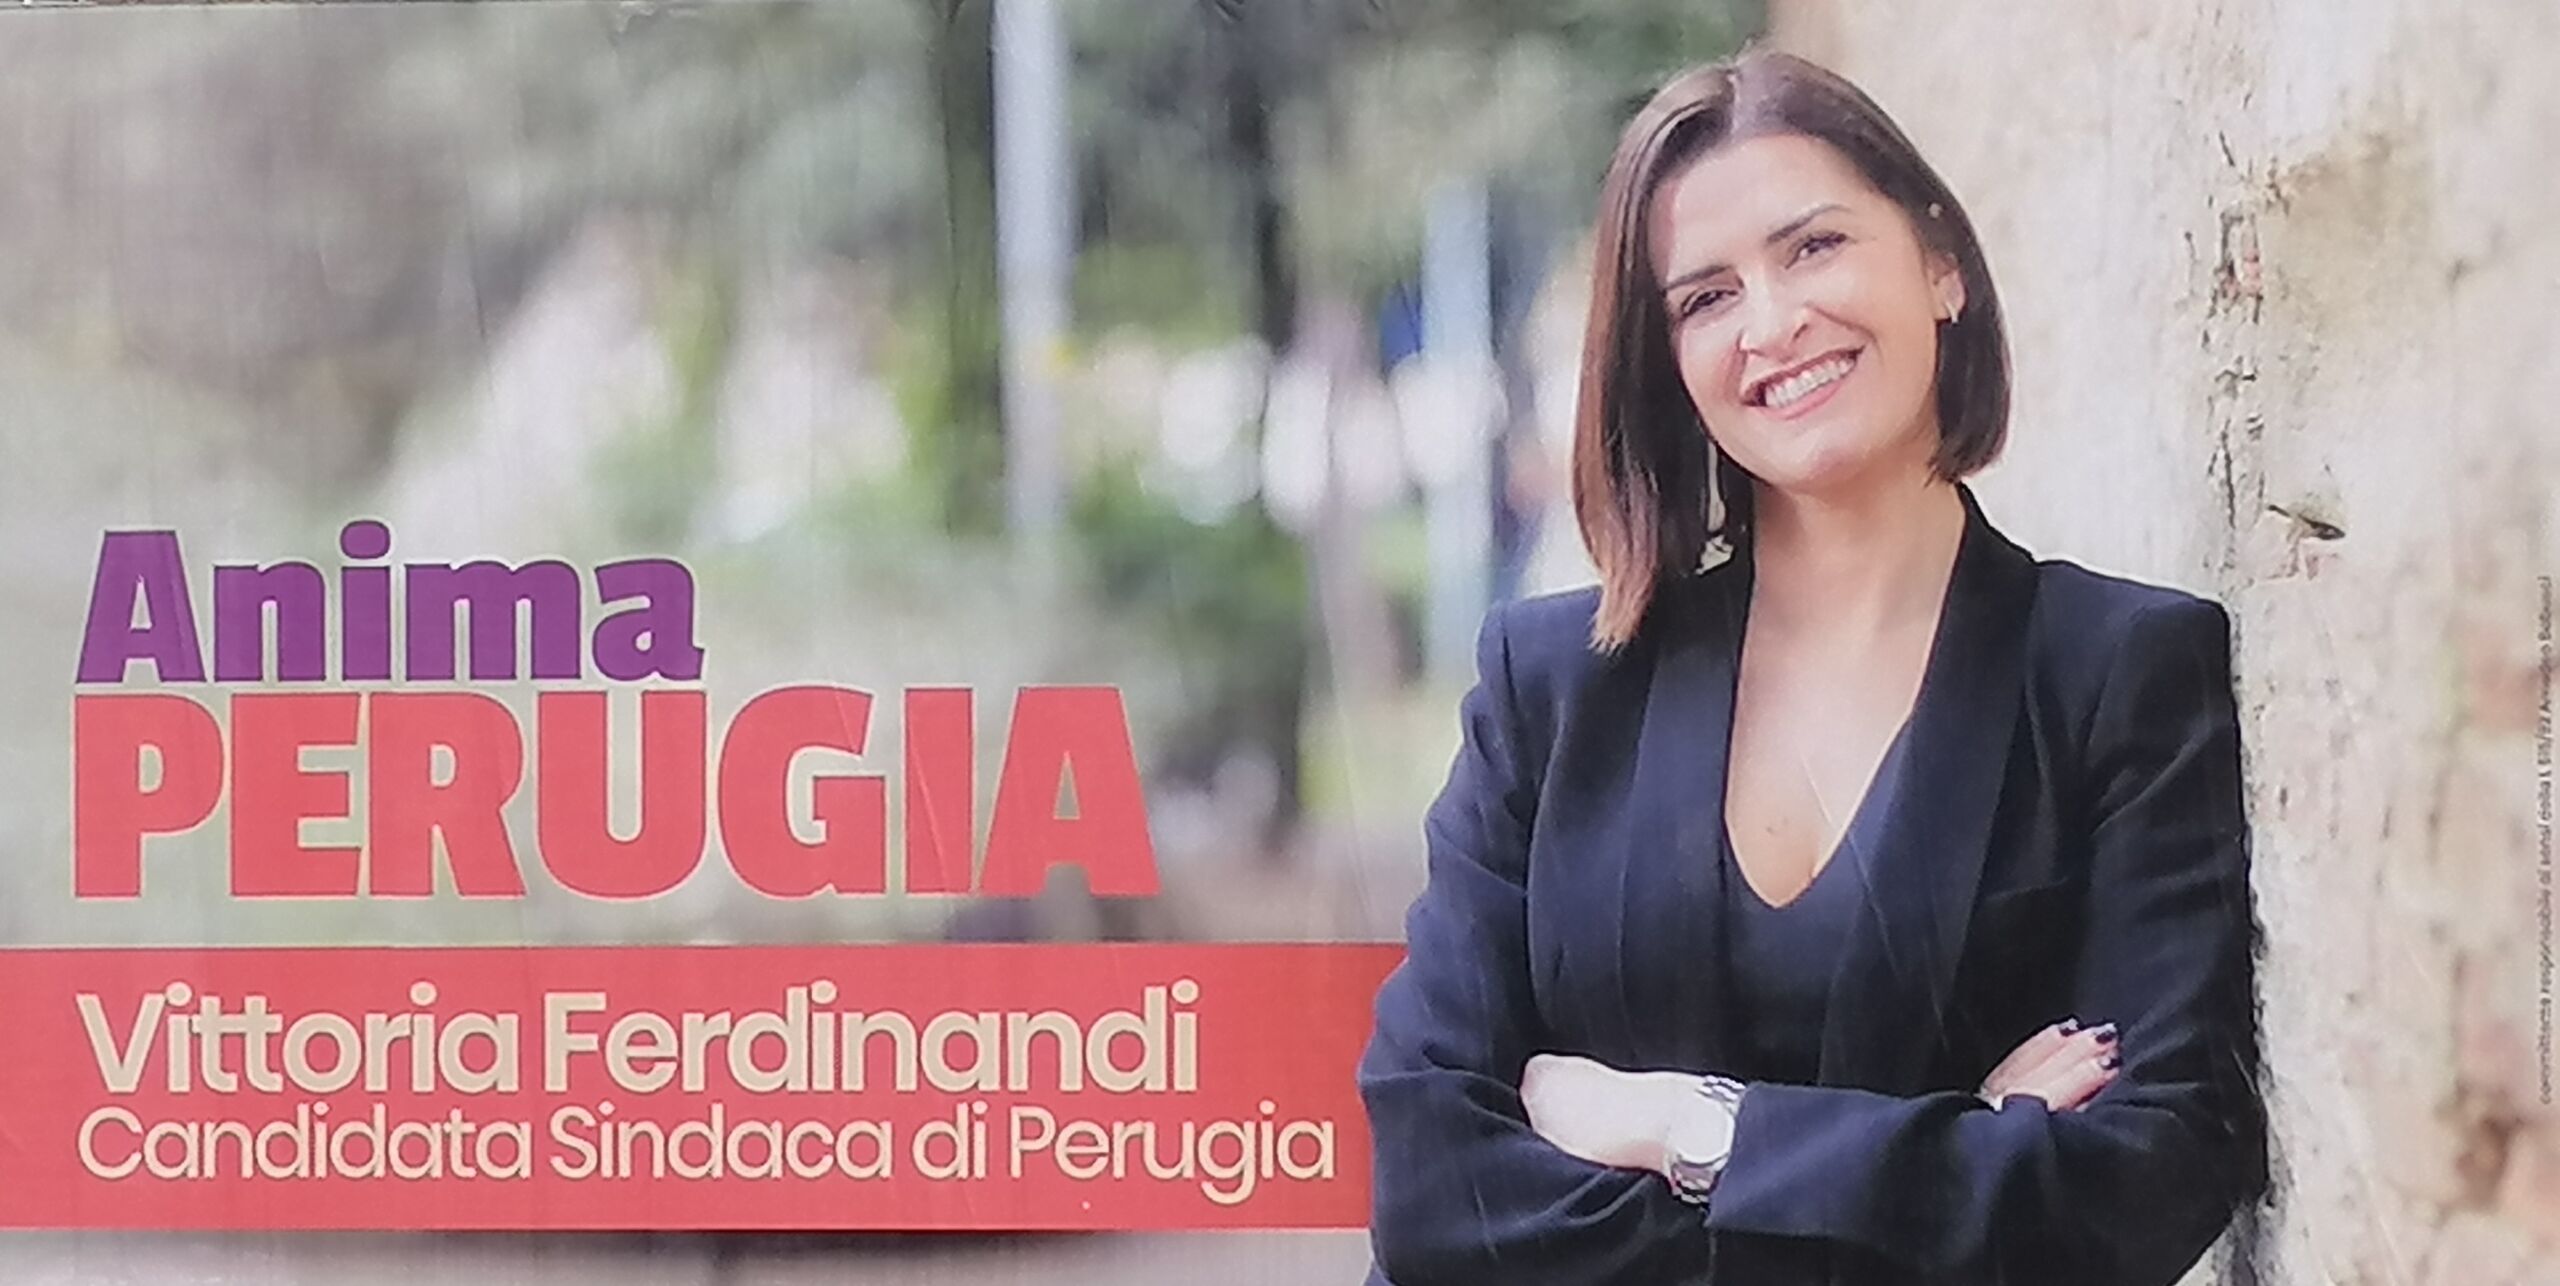 Vittoria Ferdinandi, candidata sindca del centrosinistra a Perugia